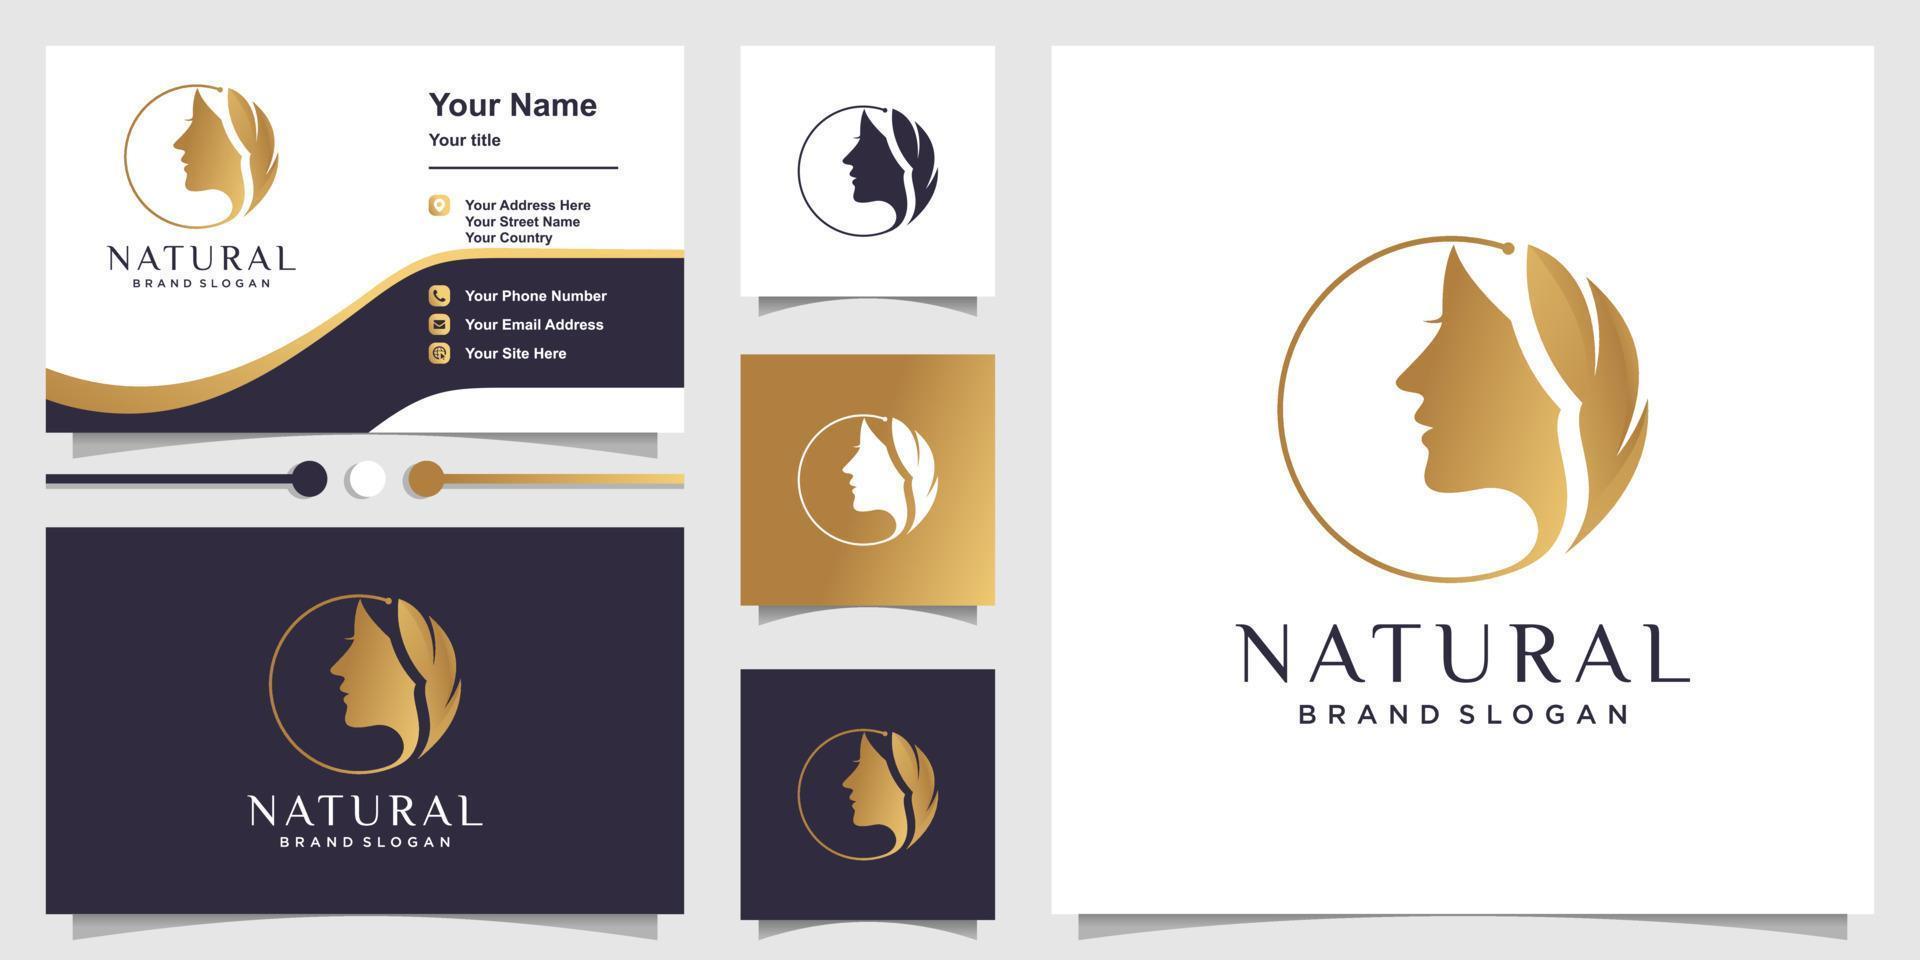 modelo de logotipo de beleza natural com conceito exclusivo e vetor premium de design de cartão de visita